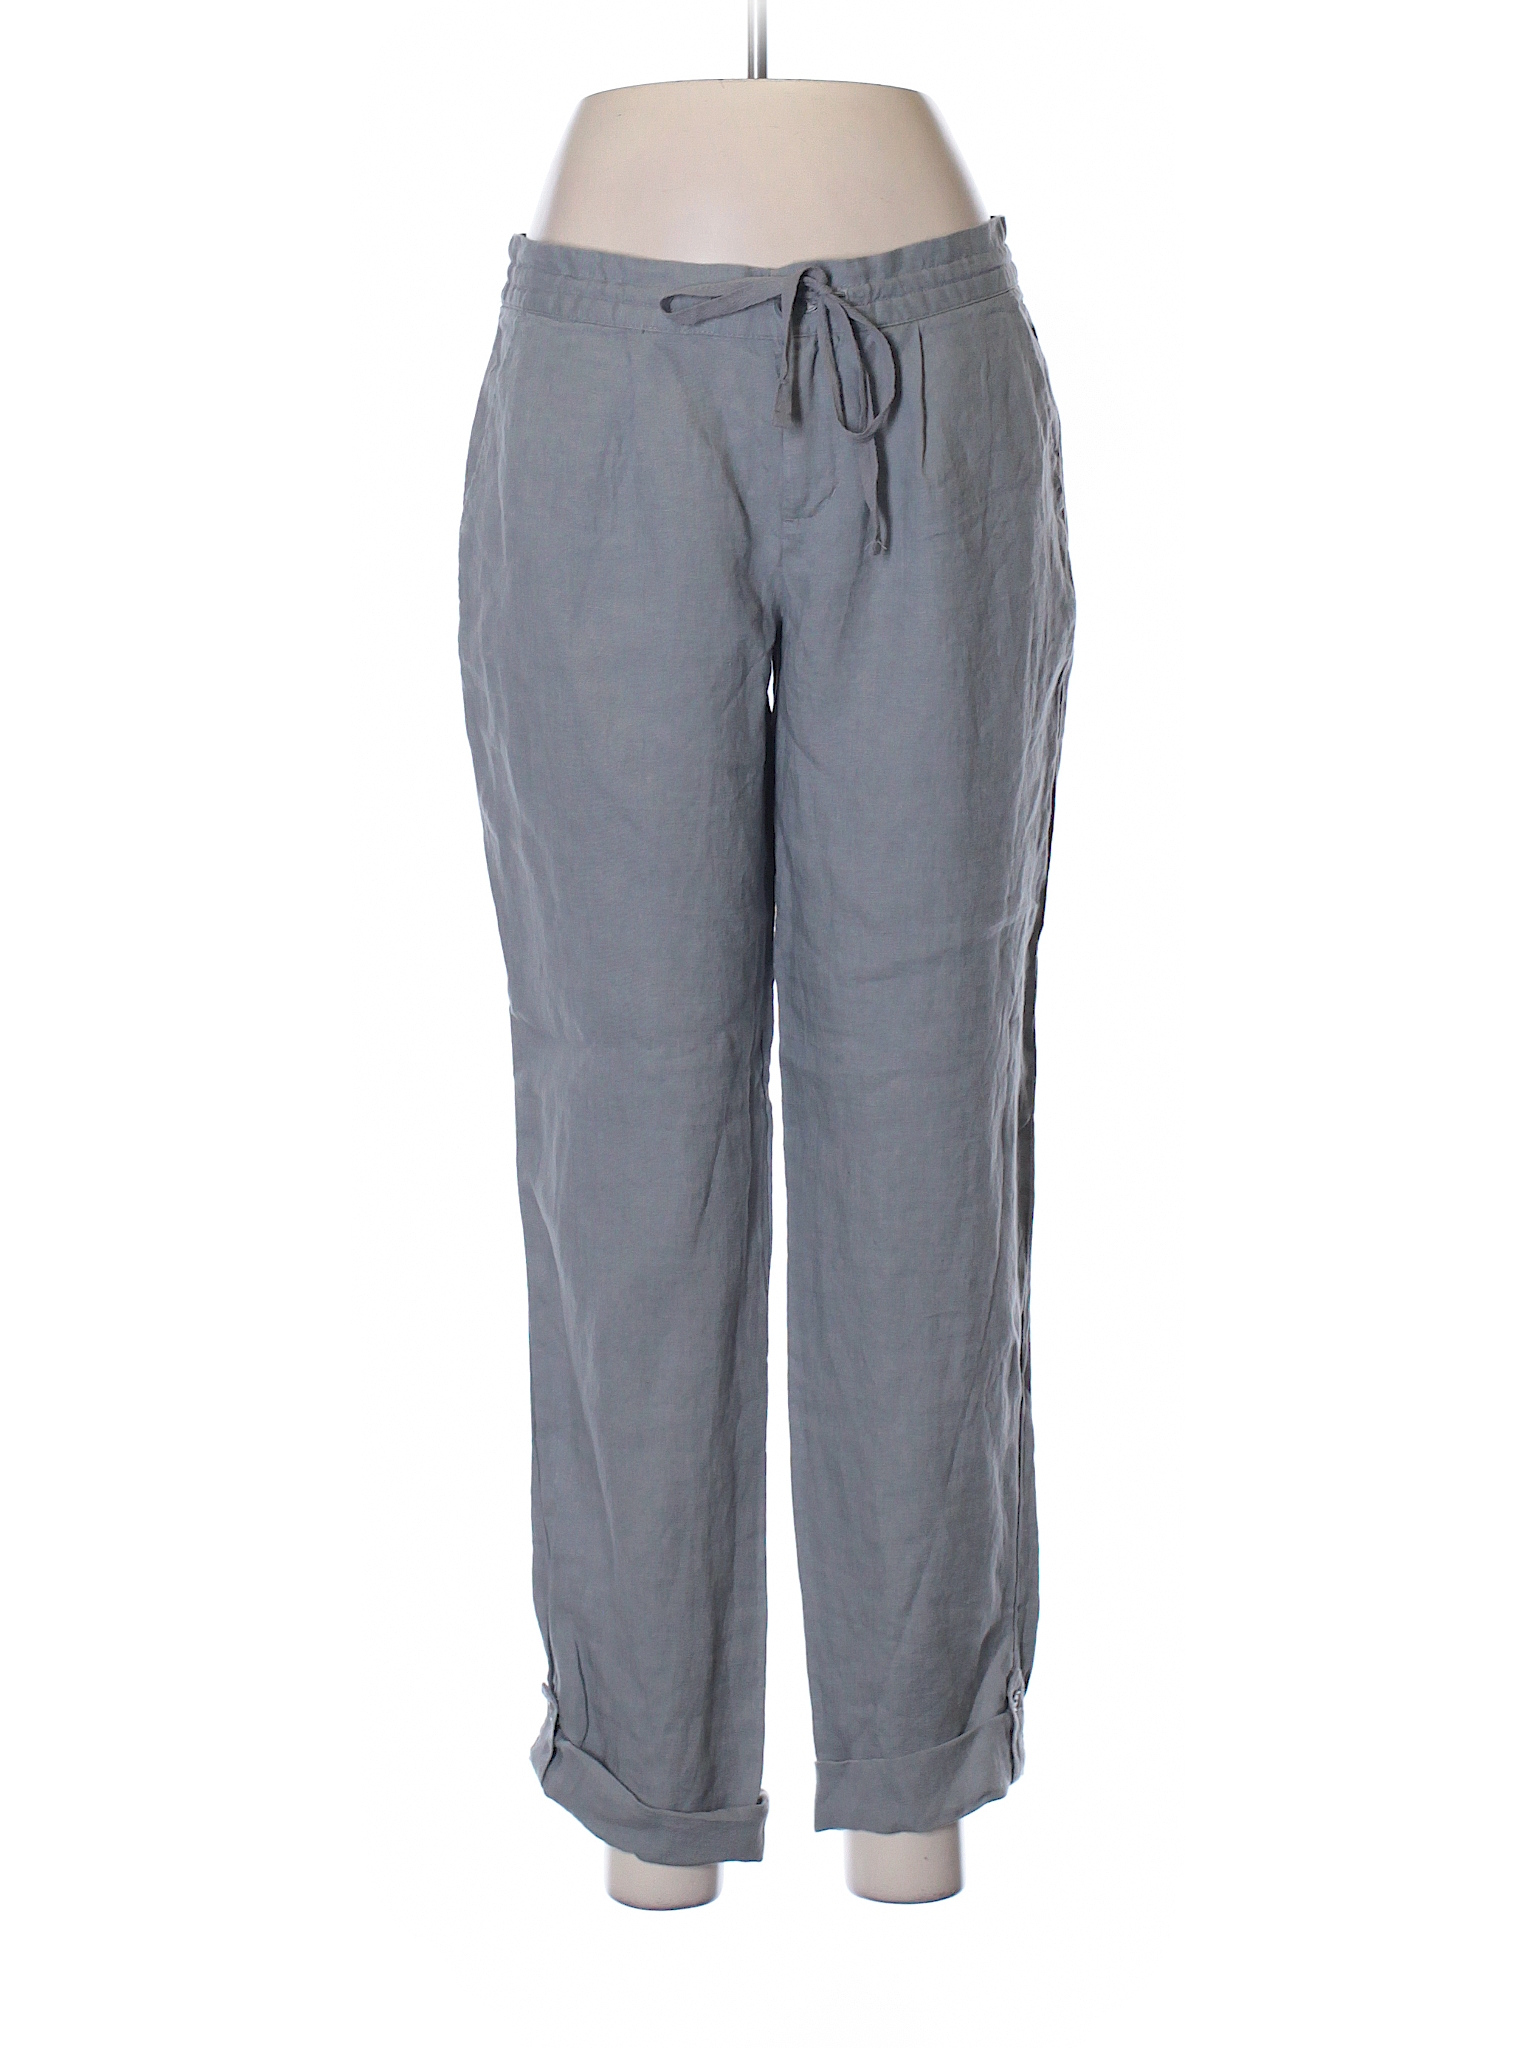 Cynthia Rowley TJX 100% Linen Solid Gray Linen Pants Size 6 - 70% off ...